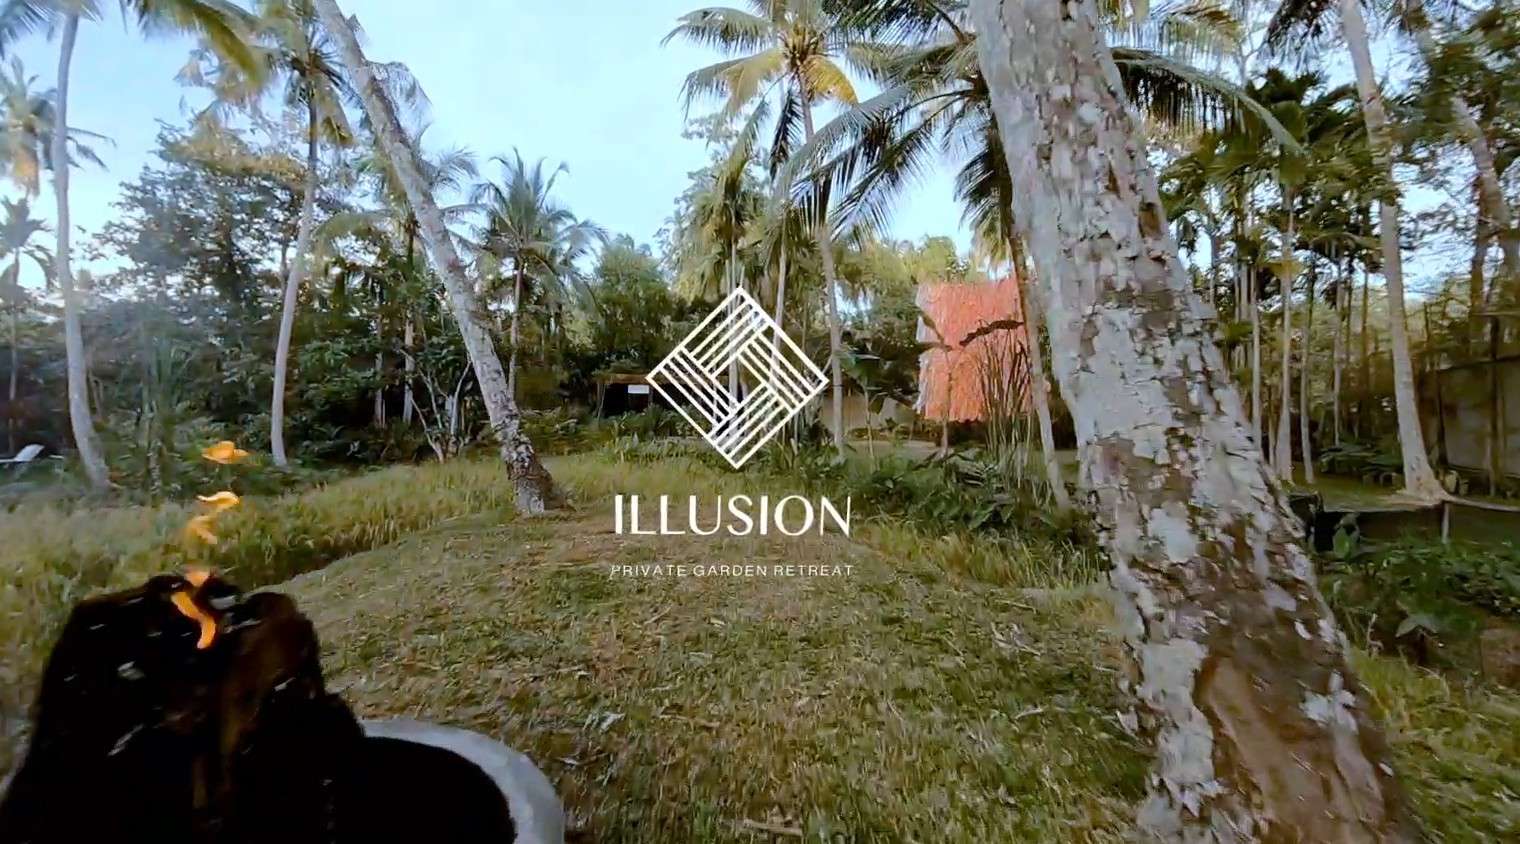 Illusion私人花园度假村宣传片---FPV穿越机视角